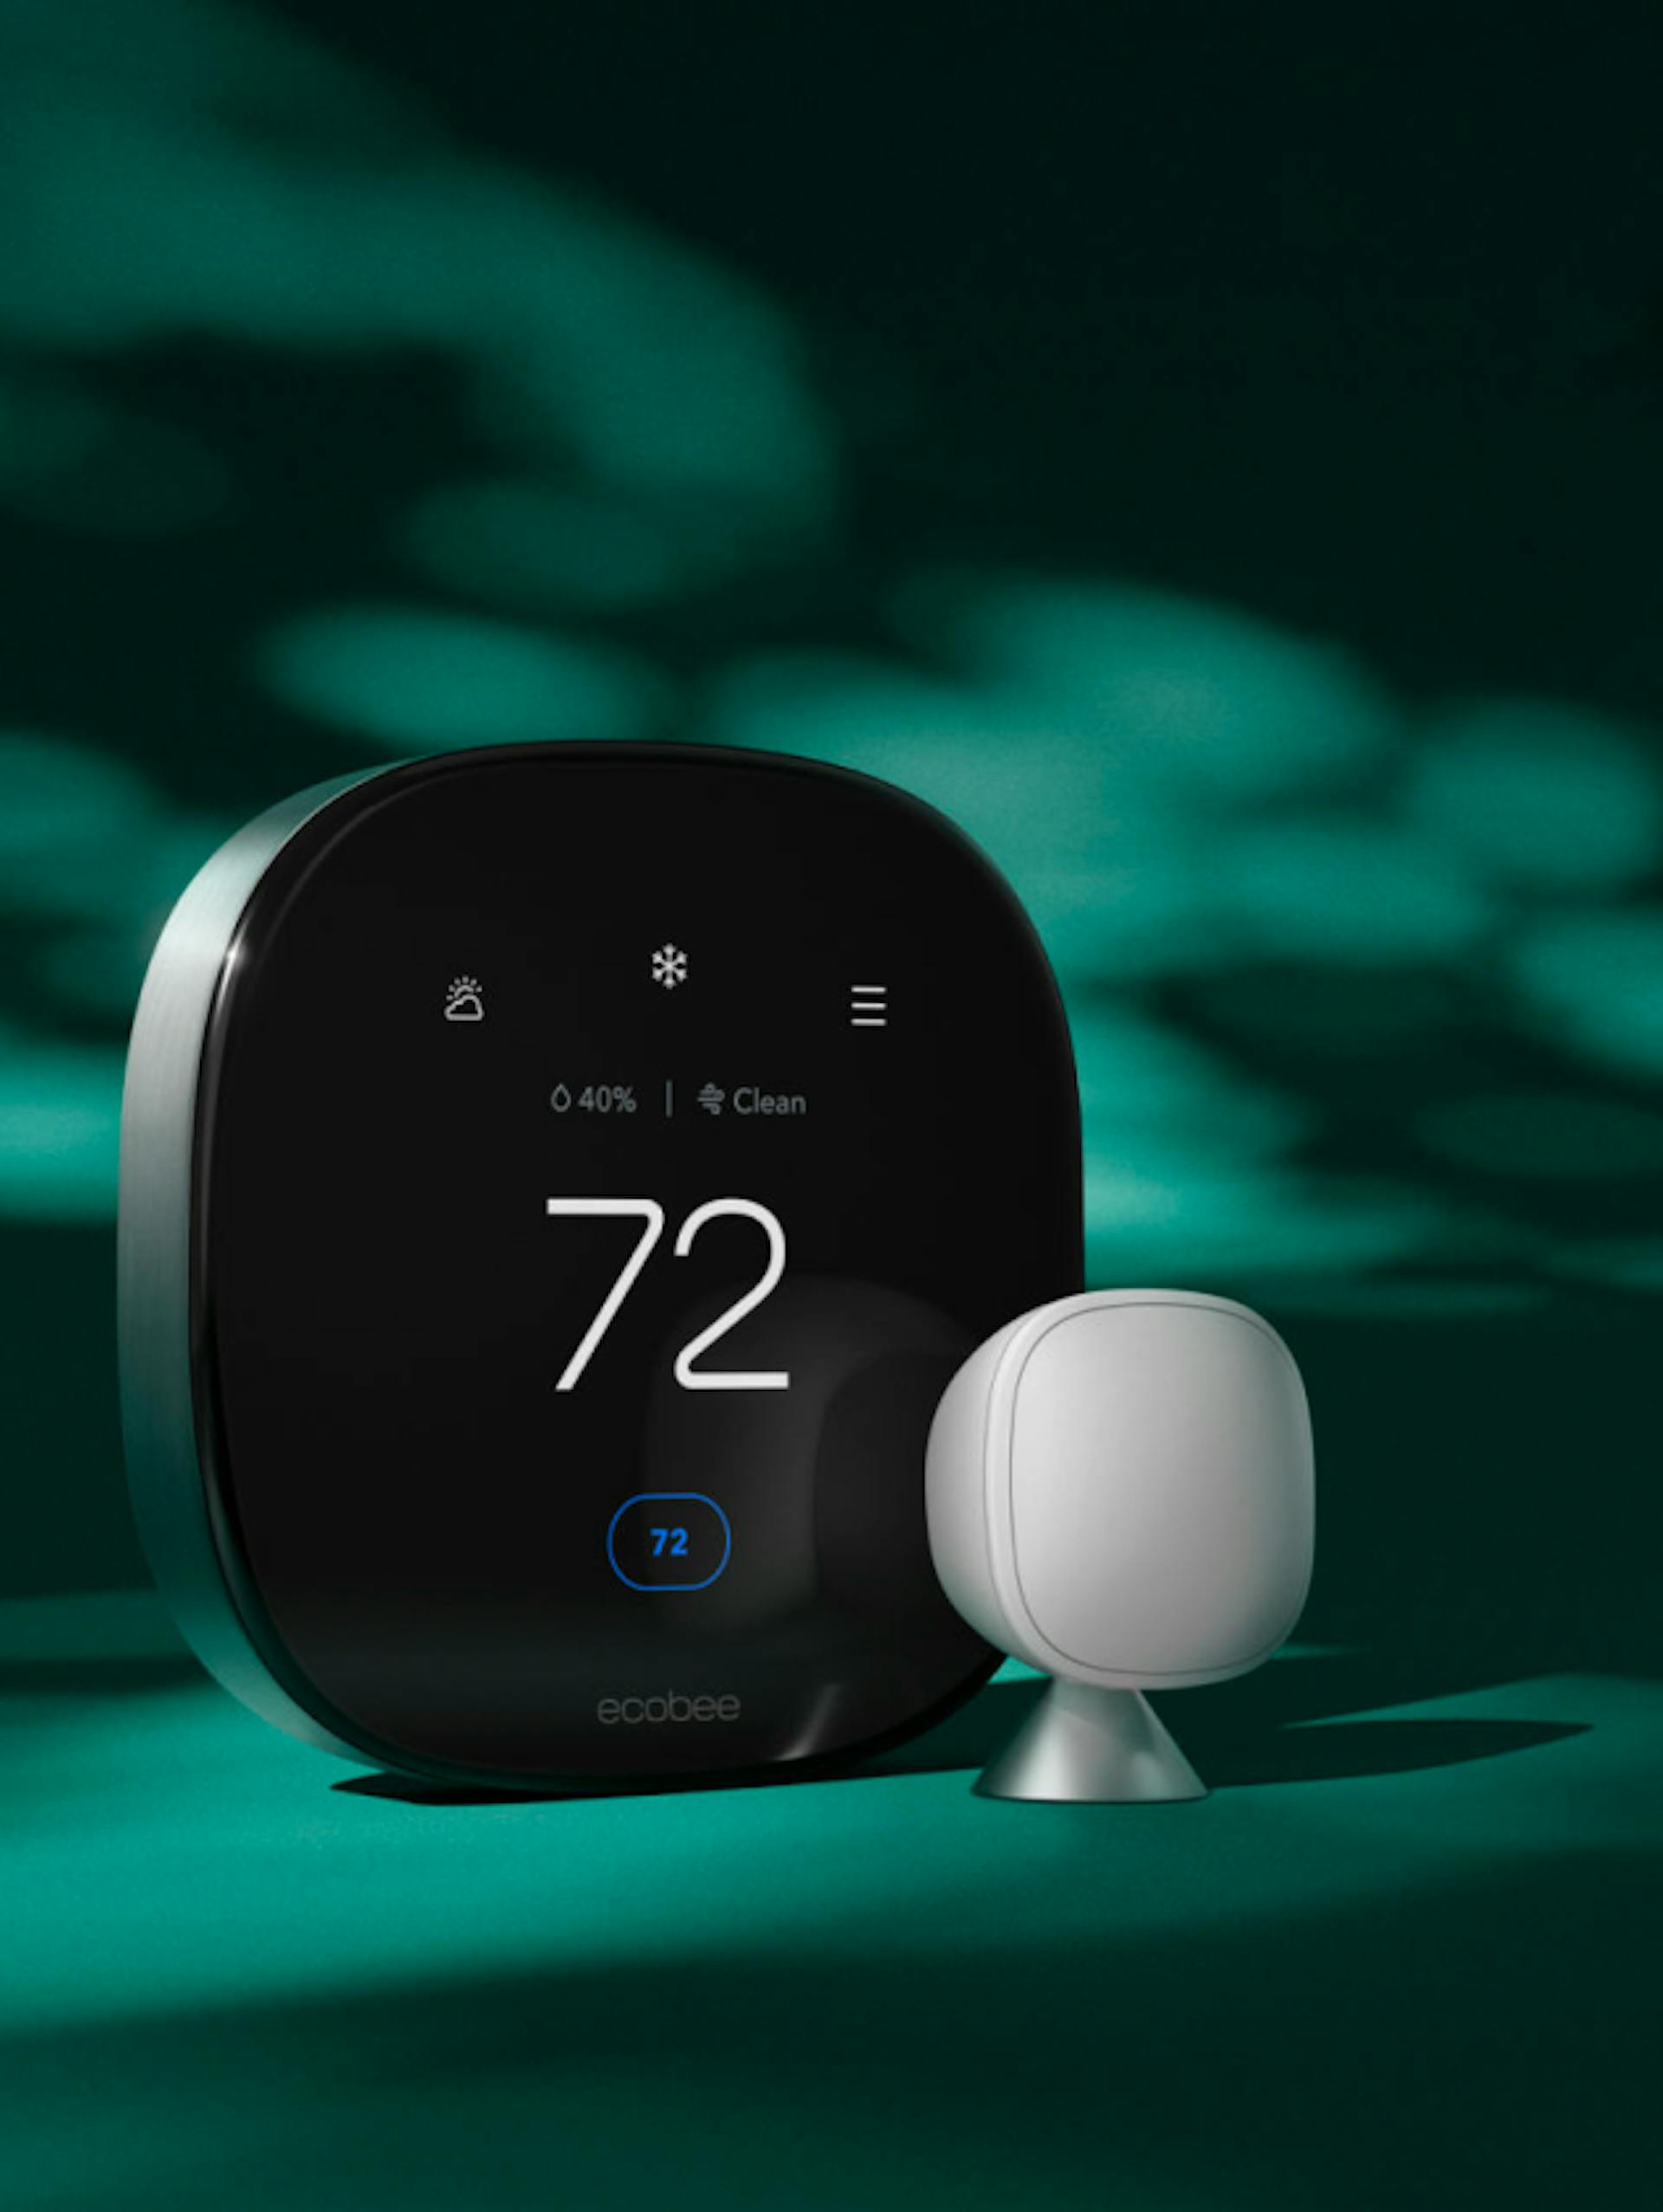 image of ecobee thermostat